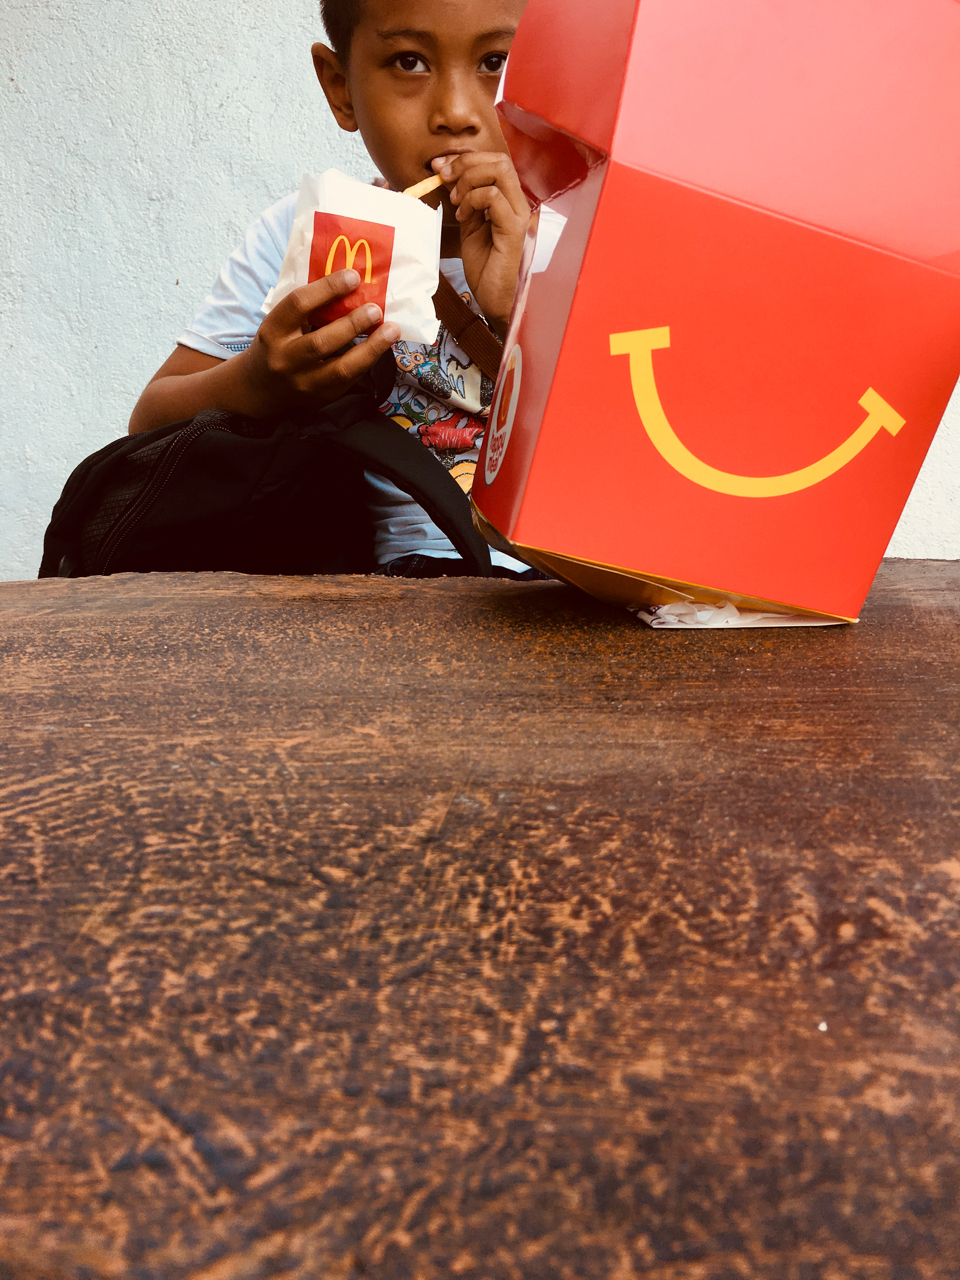 Eating McDonalds